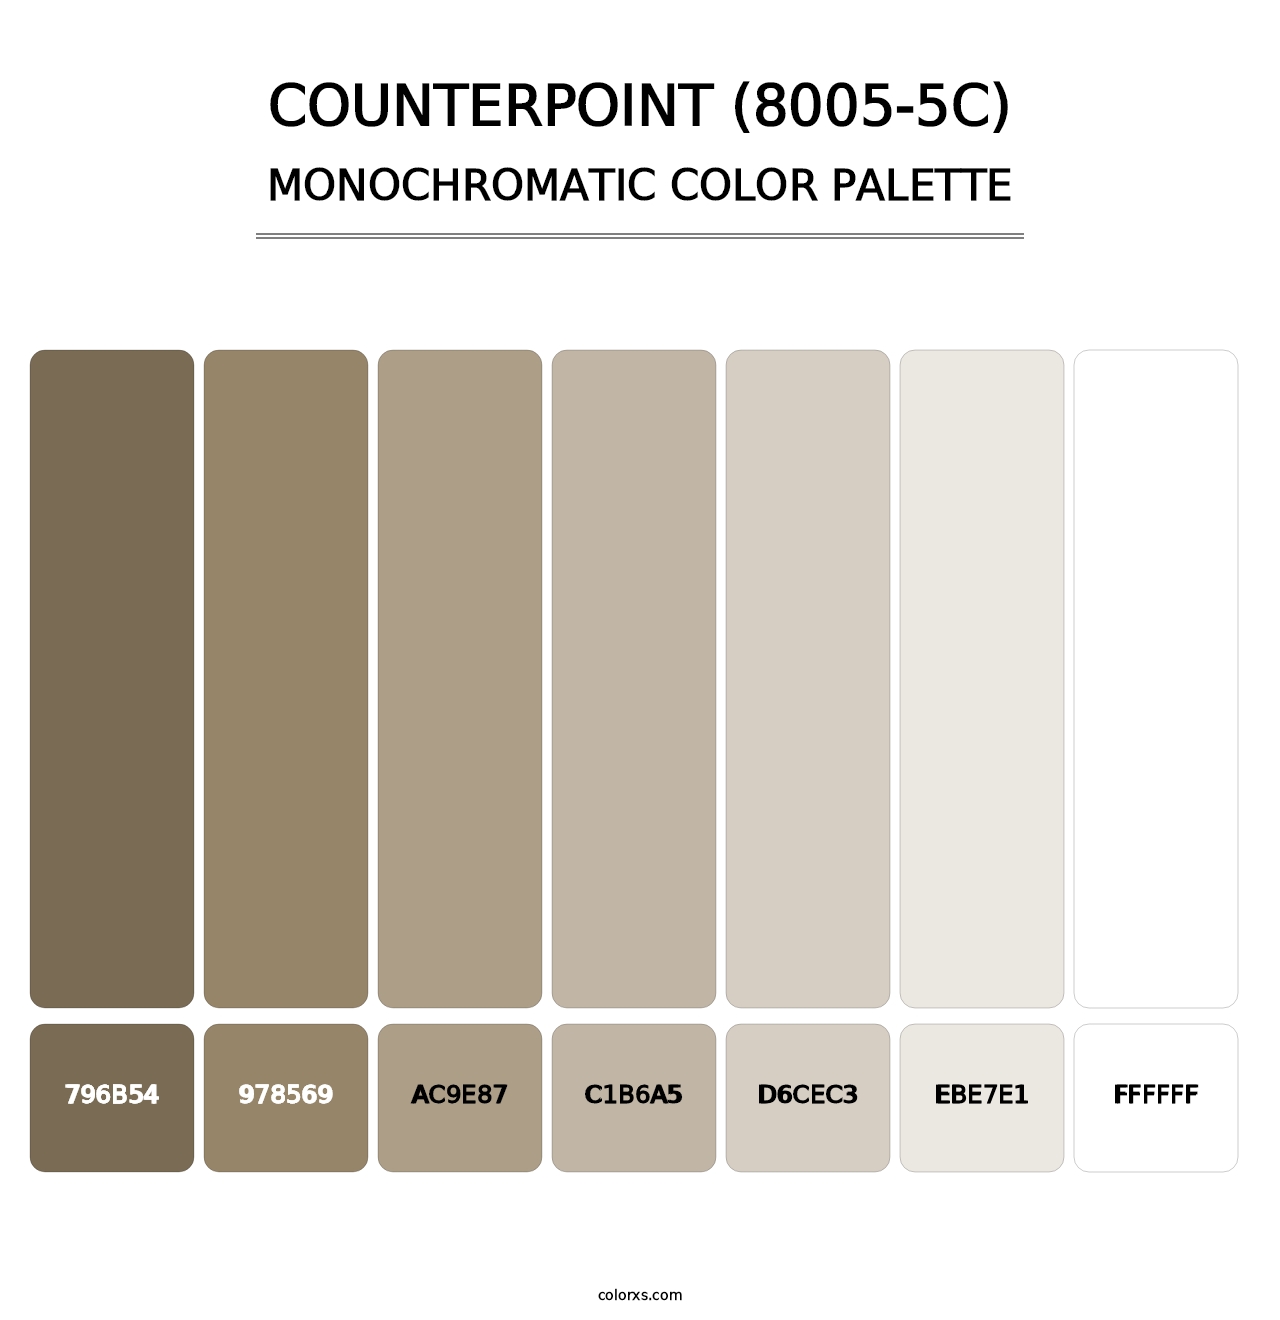 Counterpoint (8005-5C) - Monochromatic Color Palette